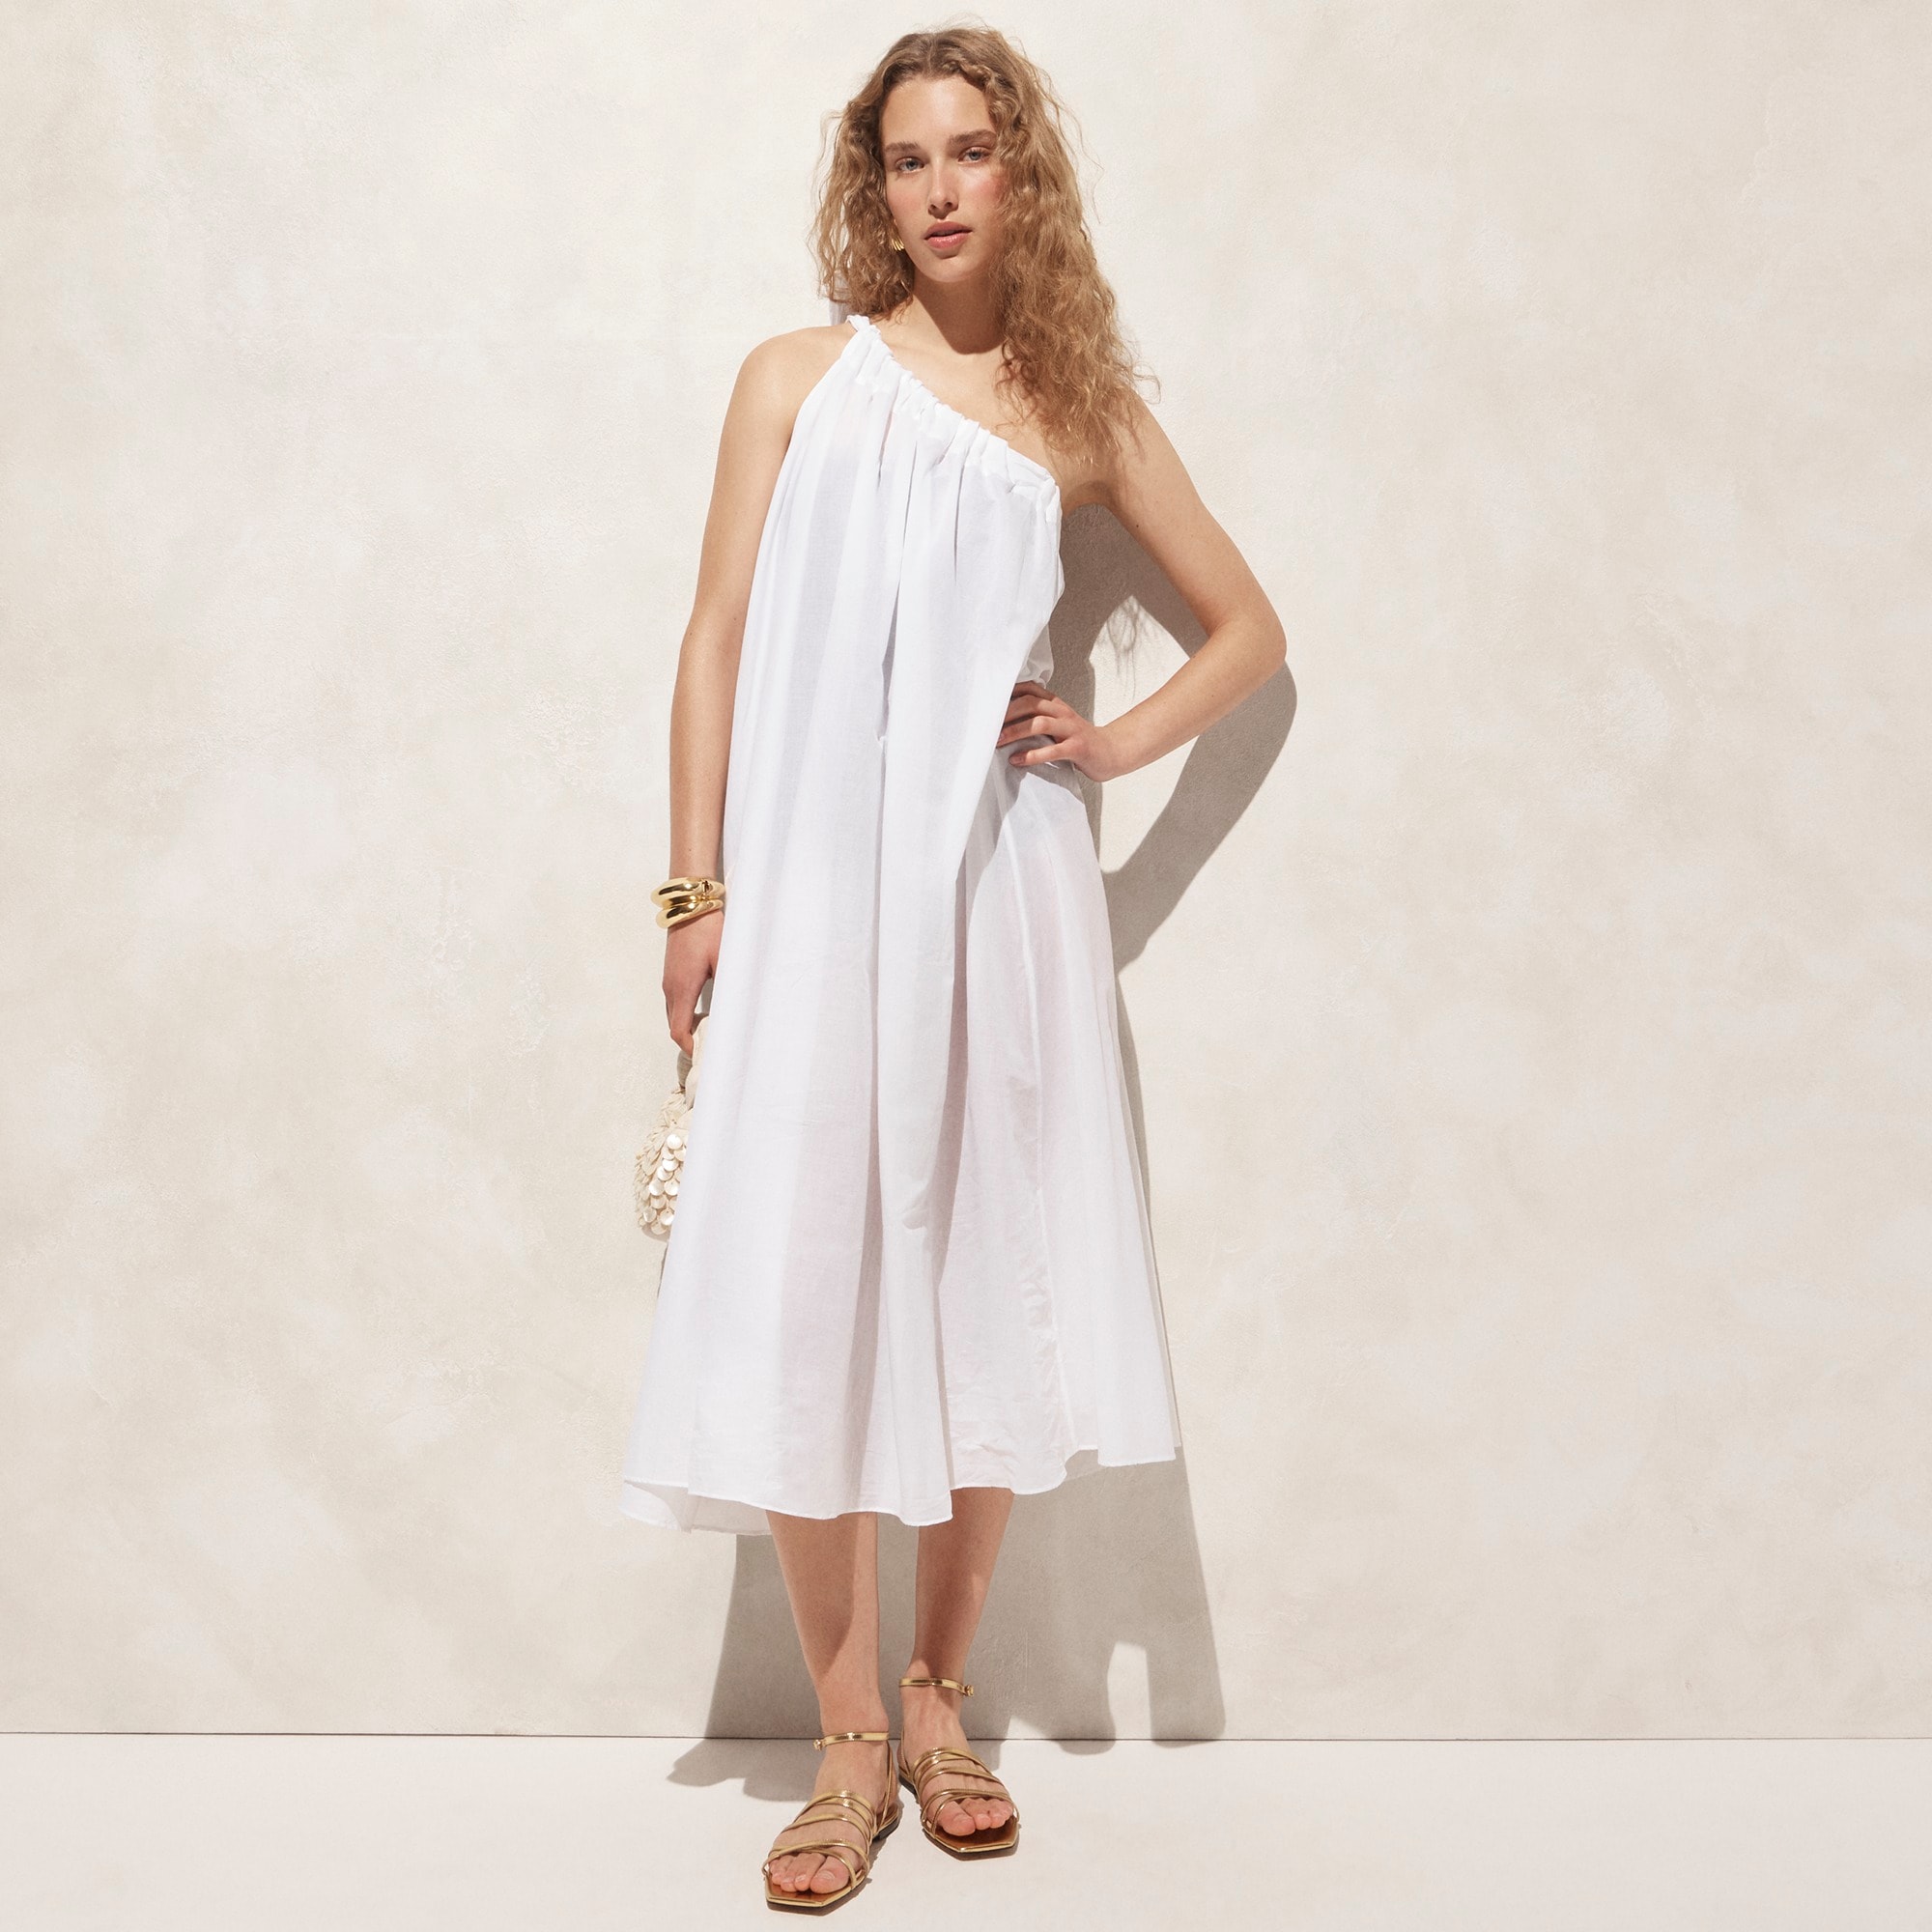  One-shoulder beach dress in cotton voile